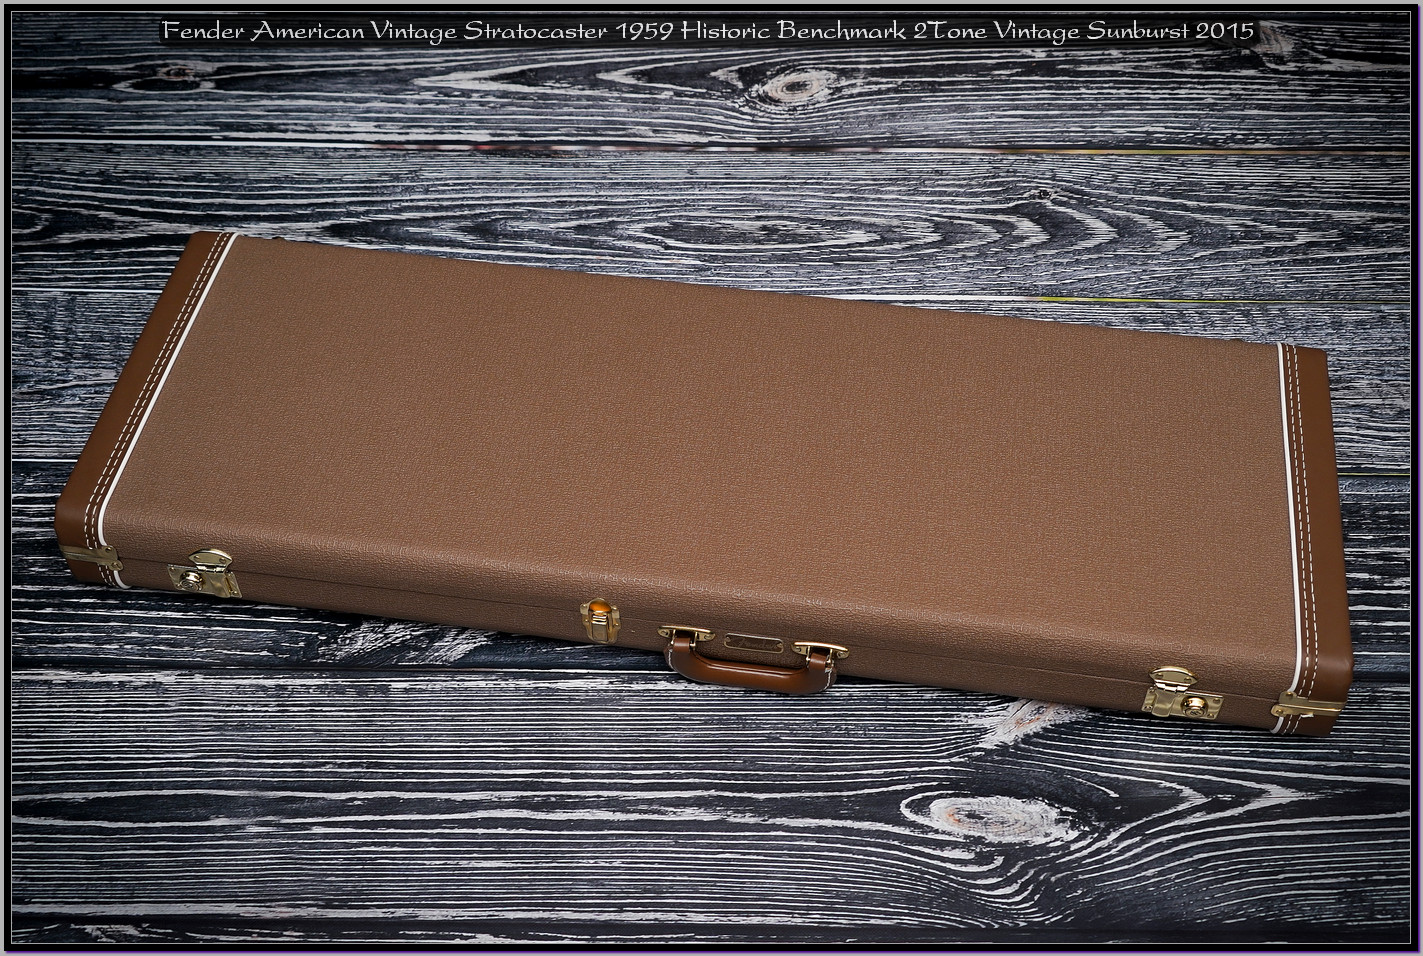 Fender American Vintage Stratocaster 1959 Historic Benchmark 2Tone Vintage Sunburst 2015 19_x1400.jpg